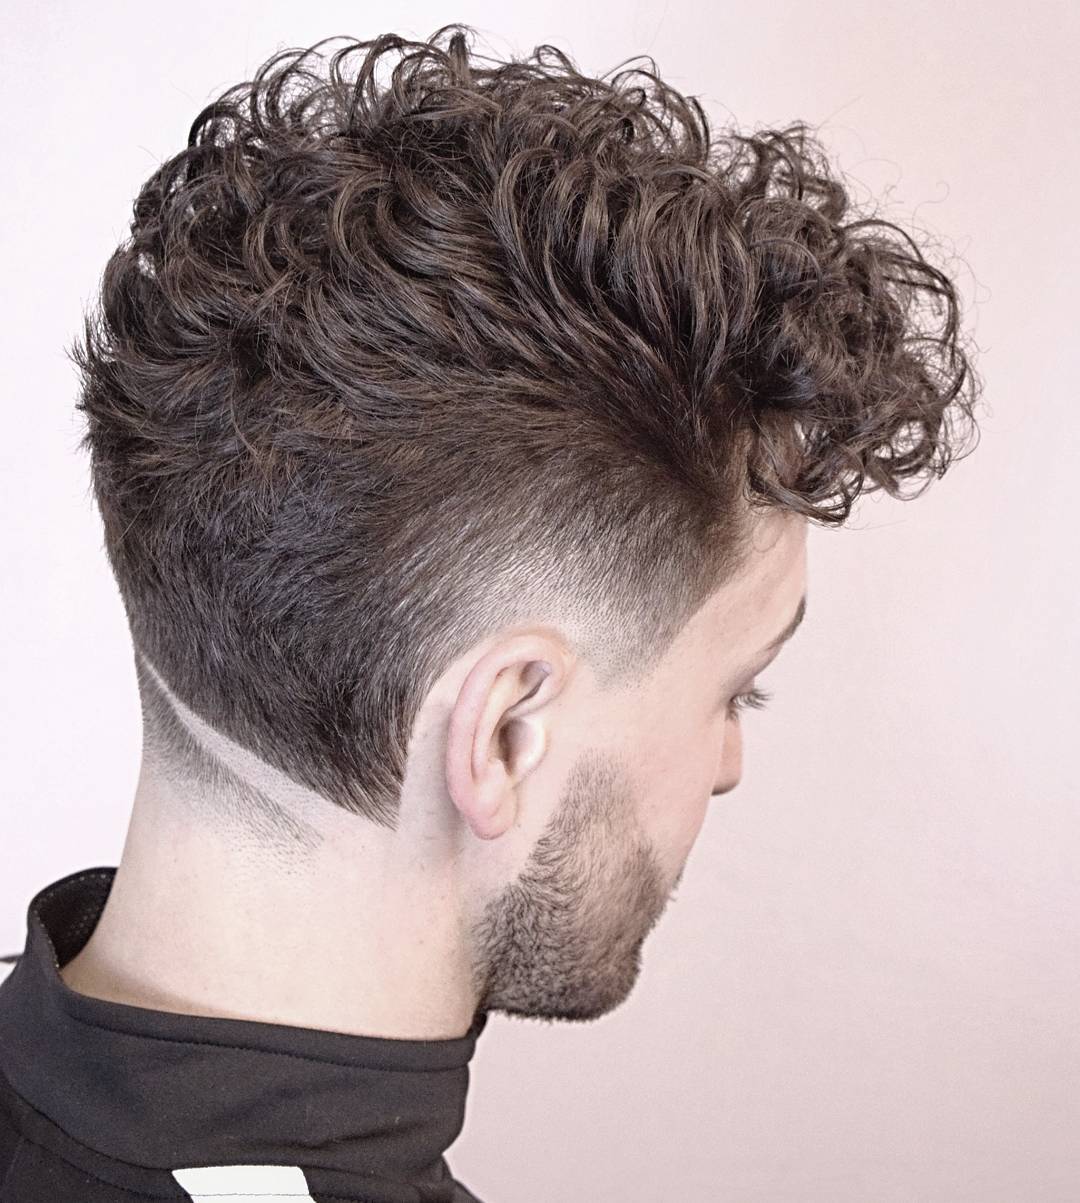 Latest 18 Popular Neckline Hair Design Men S Hairstyles Haircuts 19